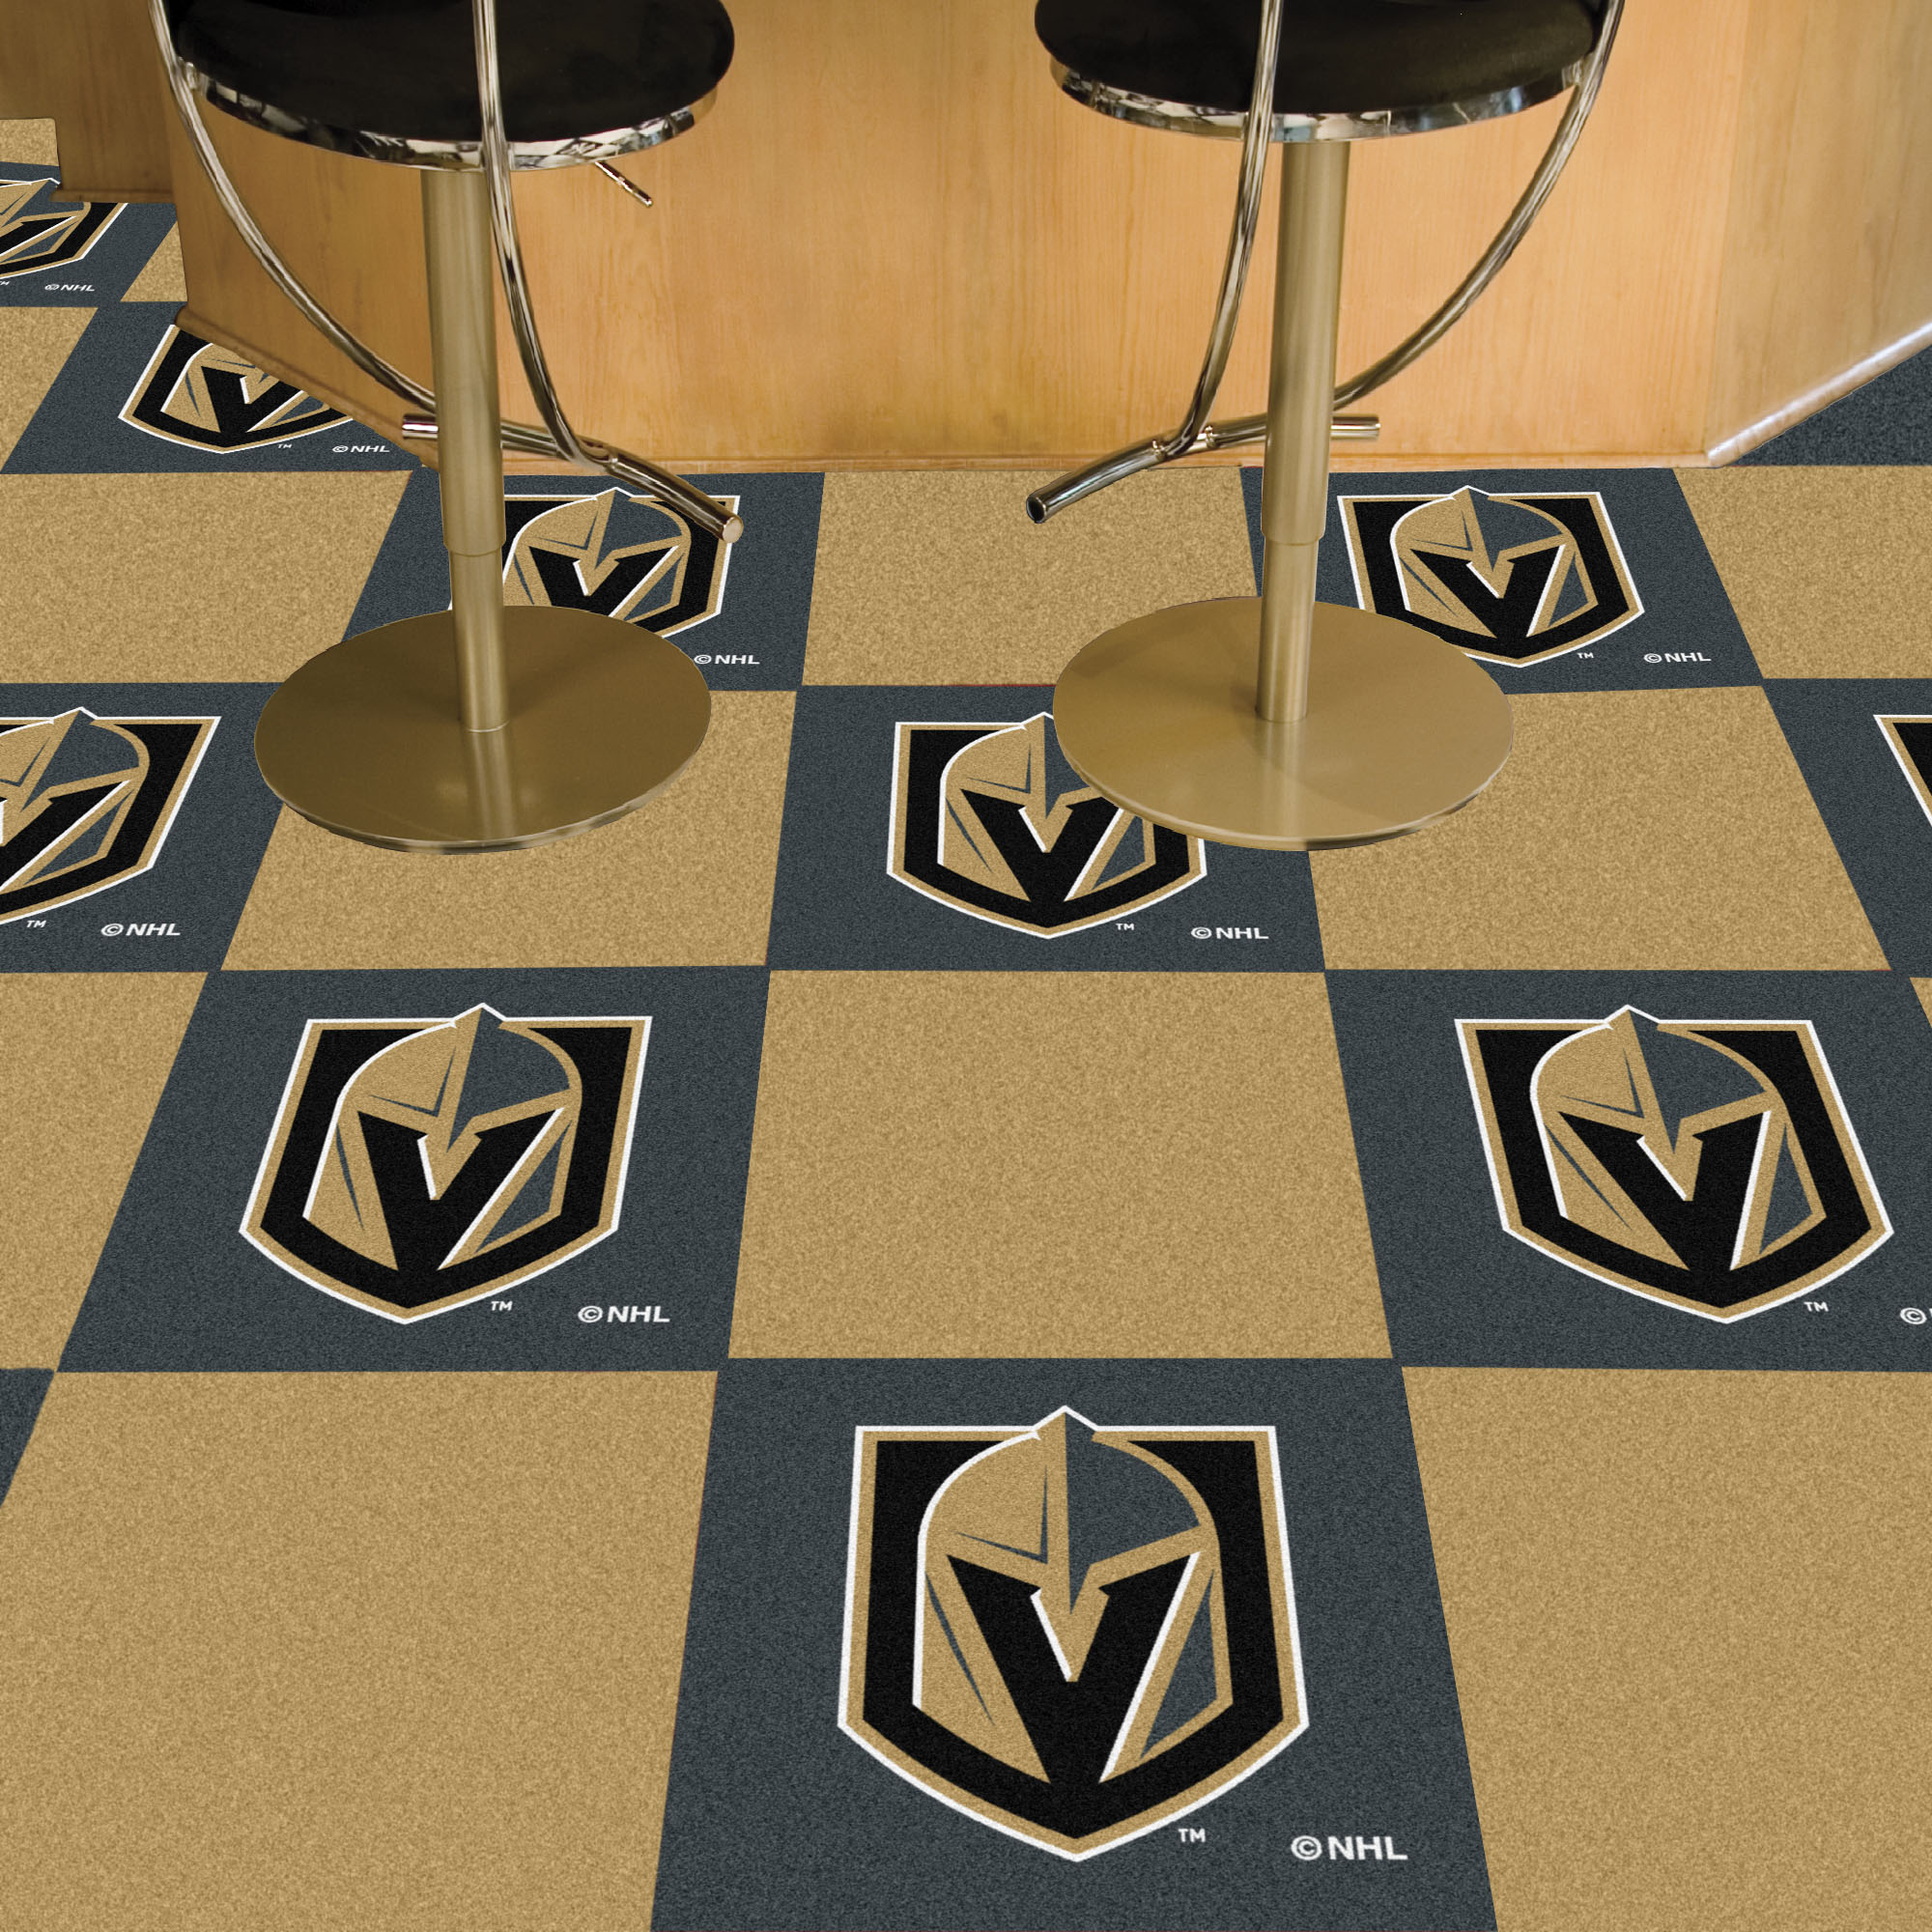 Vegas Golden Knights Team Carpet Tiles - 45 sq ft